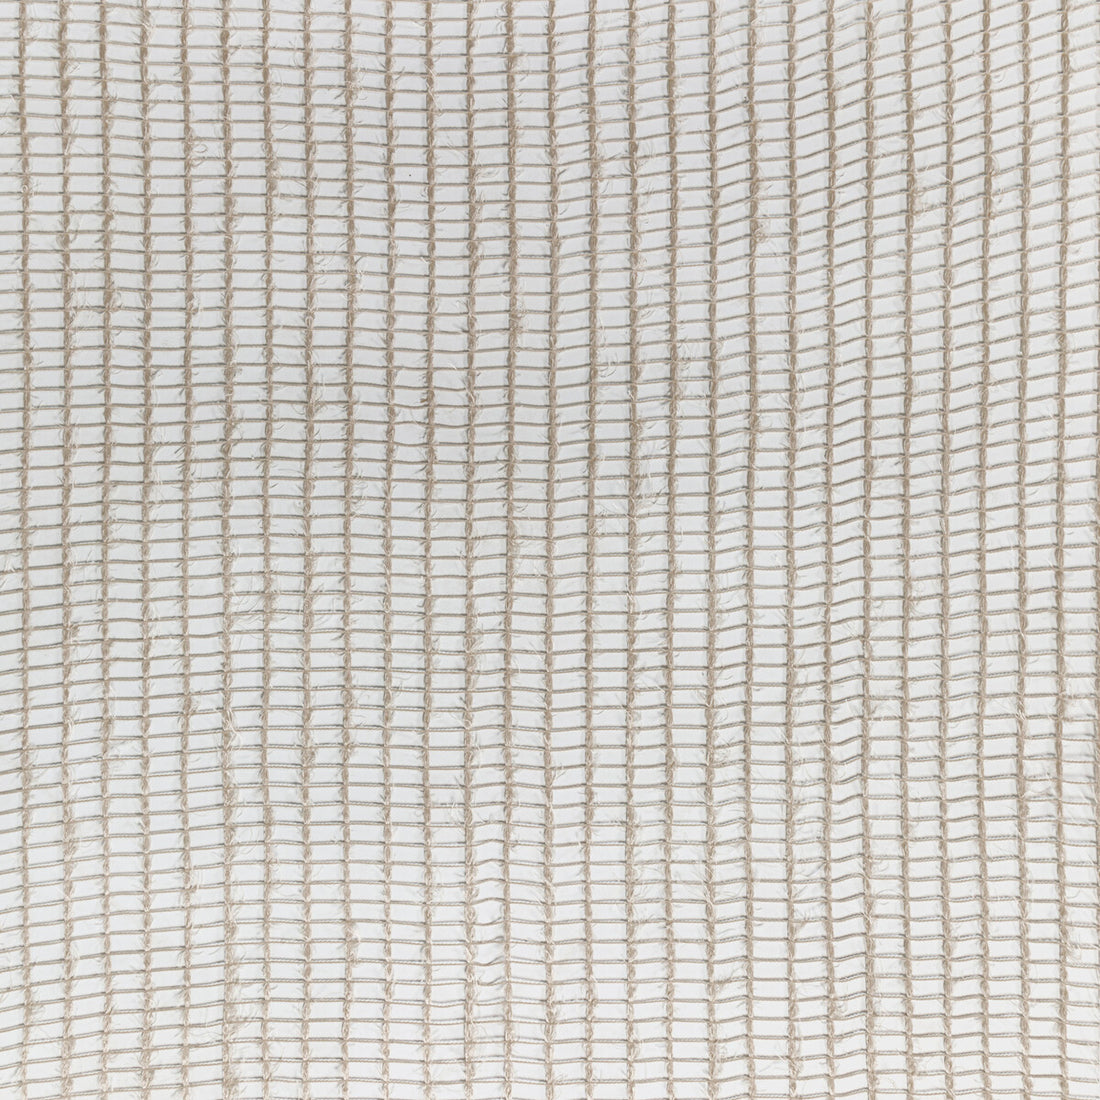 Kravet Basics fabric in 4856-106 color - pattern 4856.106.0 - by Kravet Basics in the Gis collection